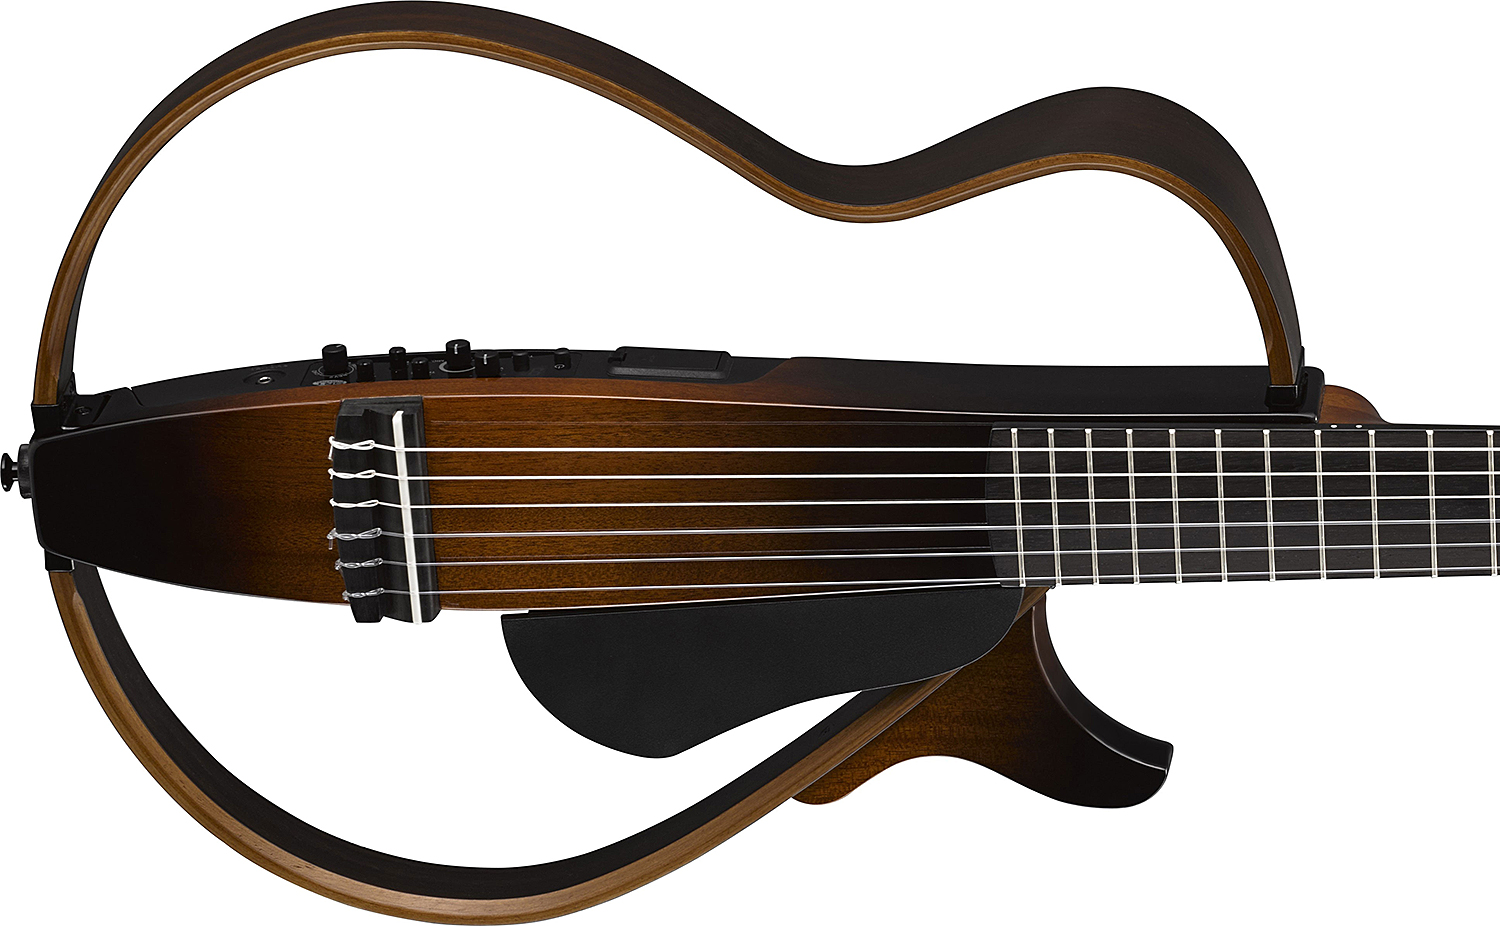 Yamaha Silent Guitar Slg200n - Tobacco Brown Sunburst Gloss - Classical guitar 4/4 size - Variation 2